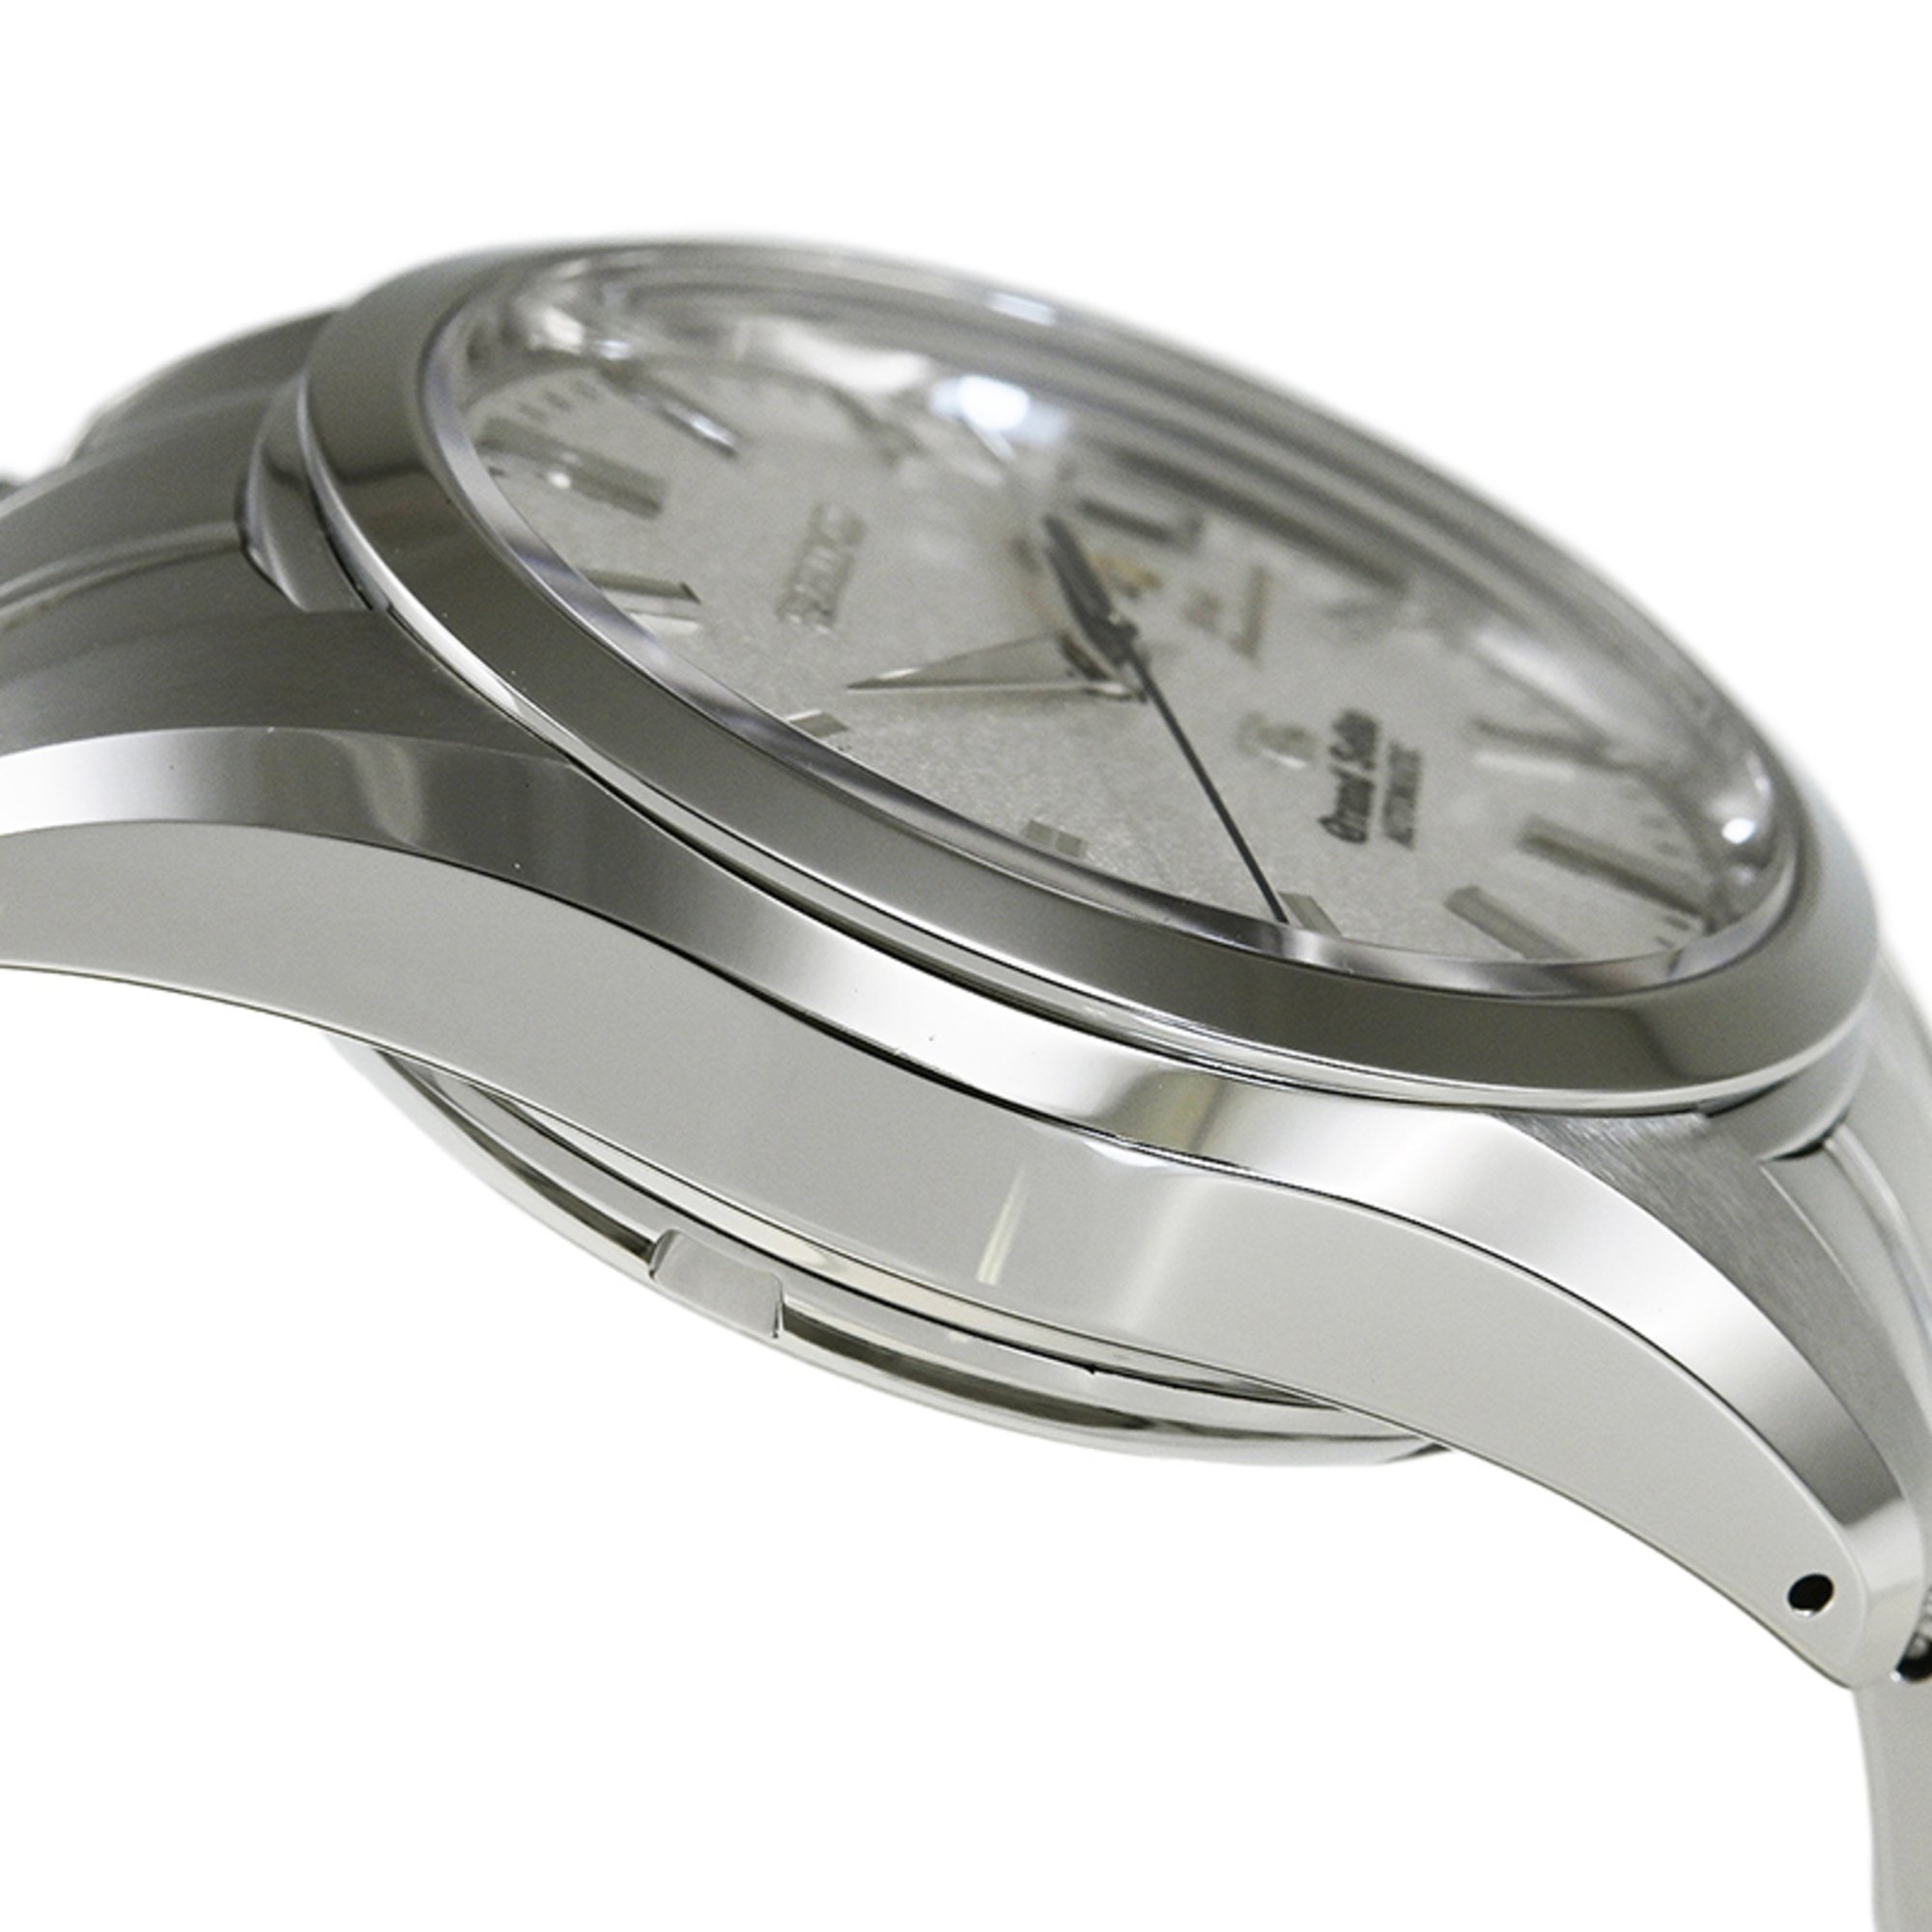 SEIKO Grand Seiko 9S mechanical watch 50th anniversary limited edition 500 SBGR065